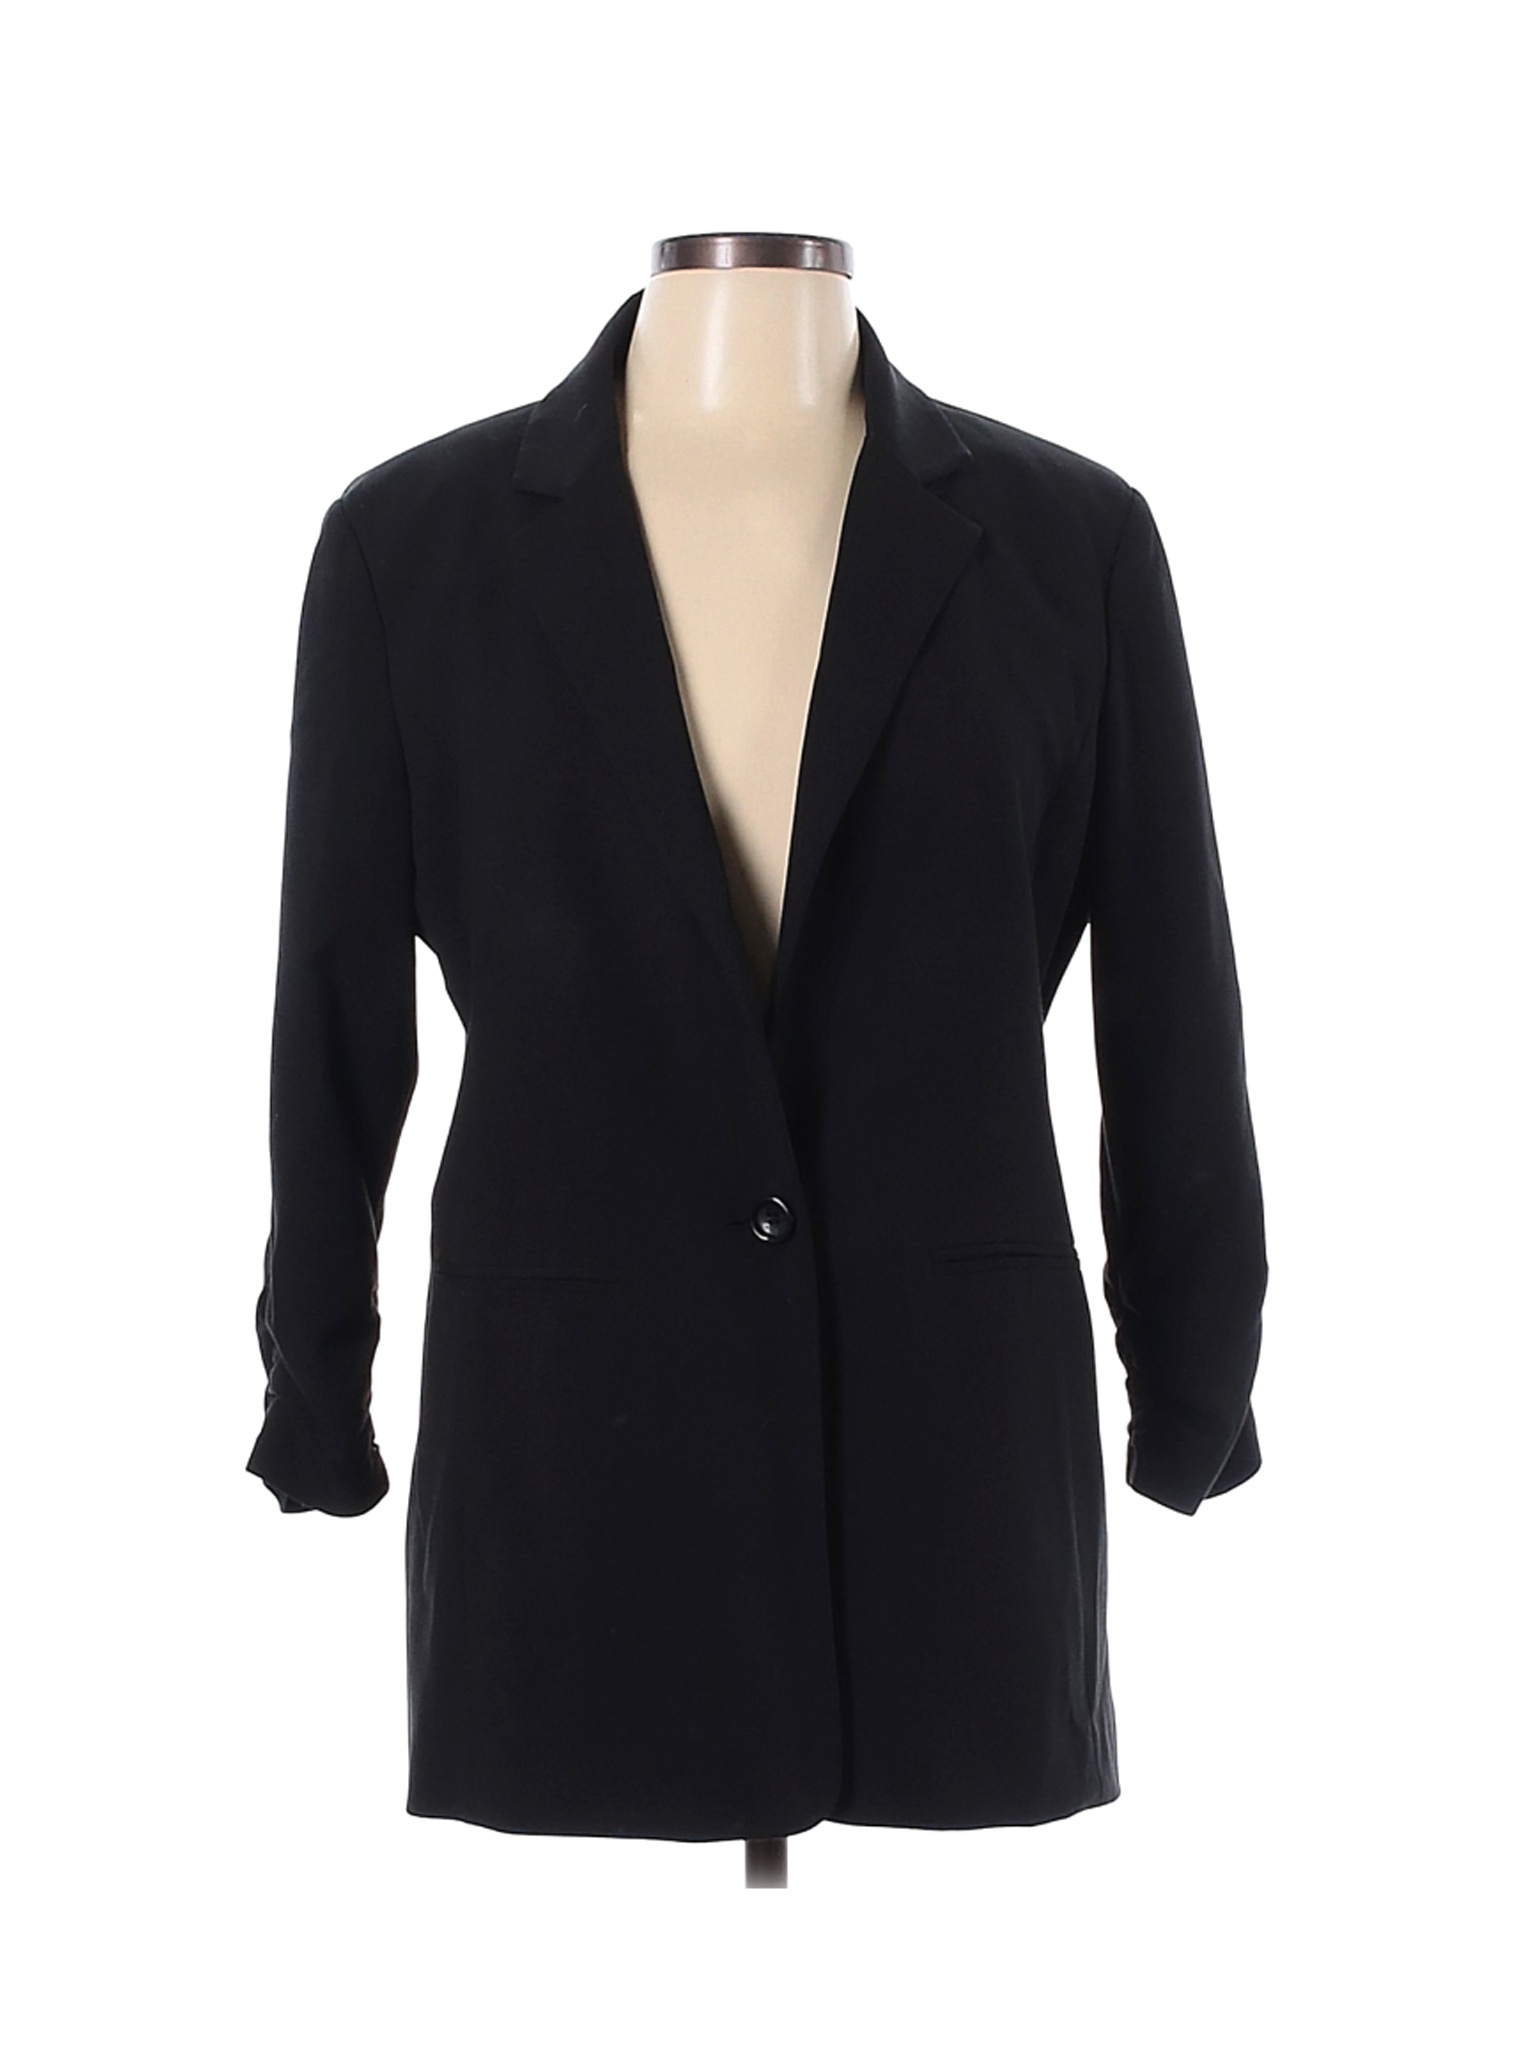 MICHAEL Michael Kors Women Black Blazer 12 | eBay